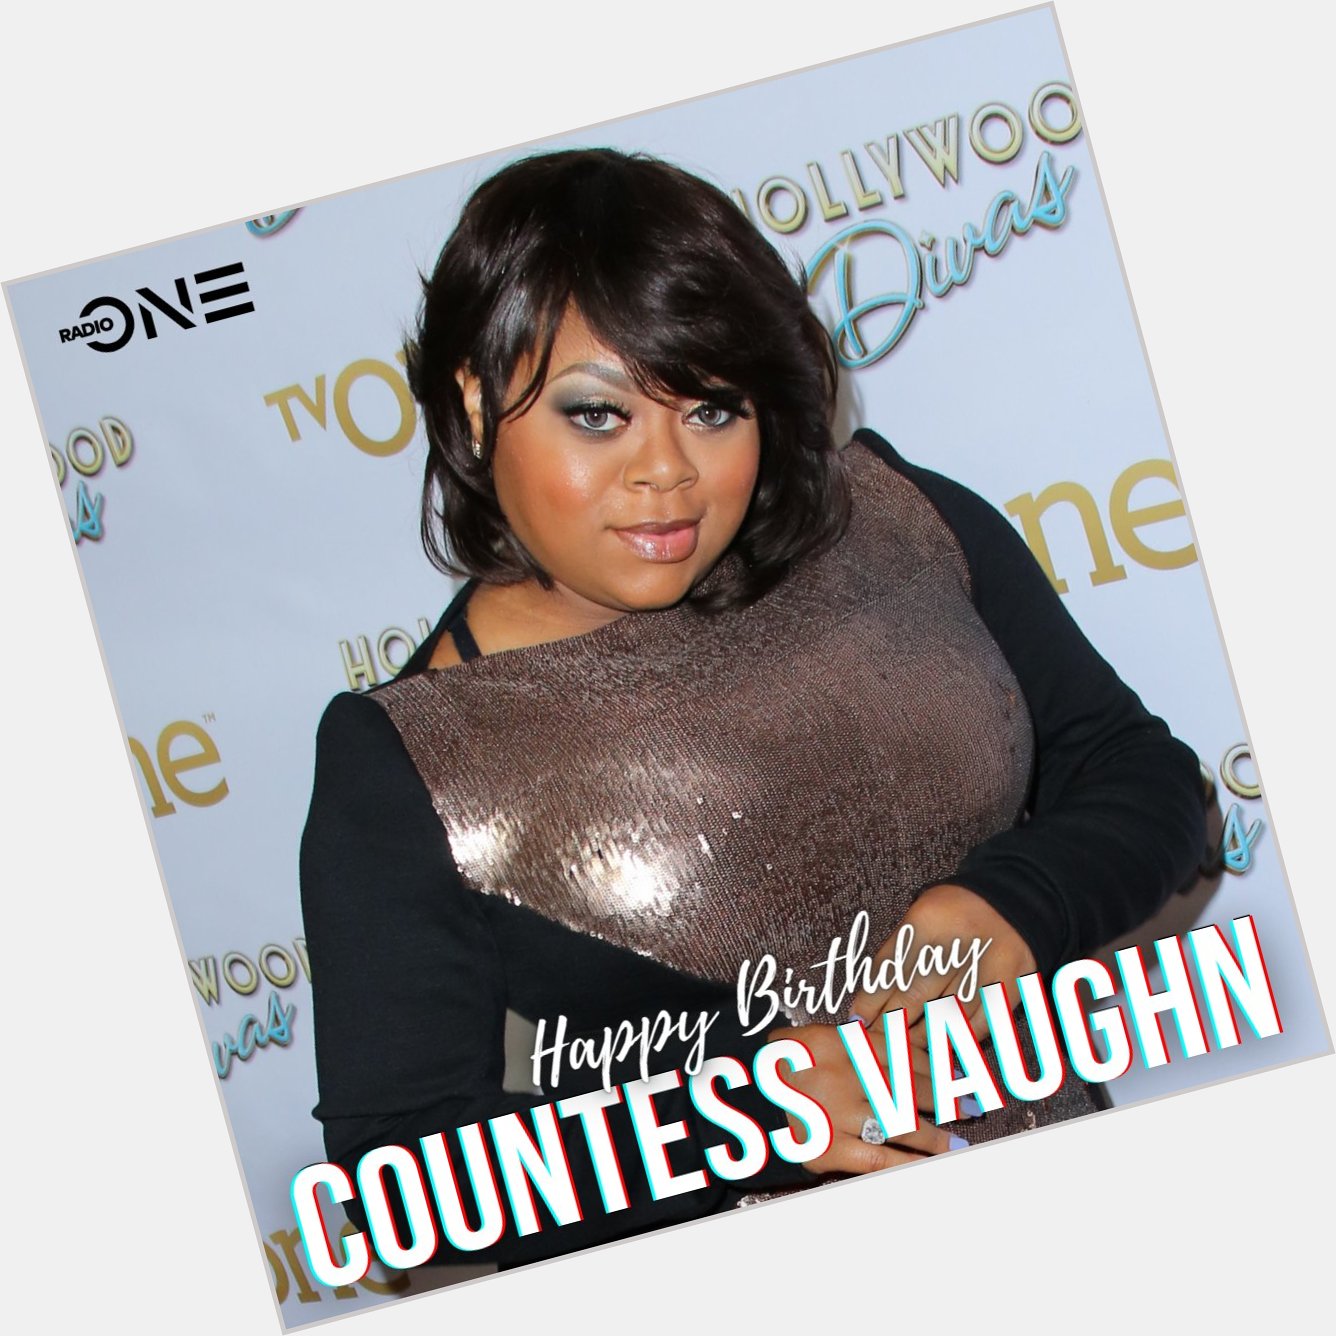 Wishing Countess Vaughn a very Happy Birthday 